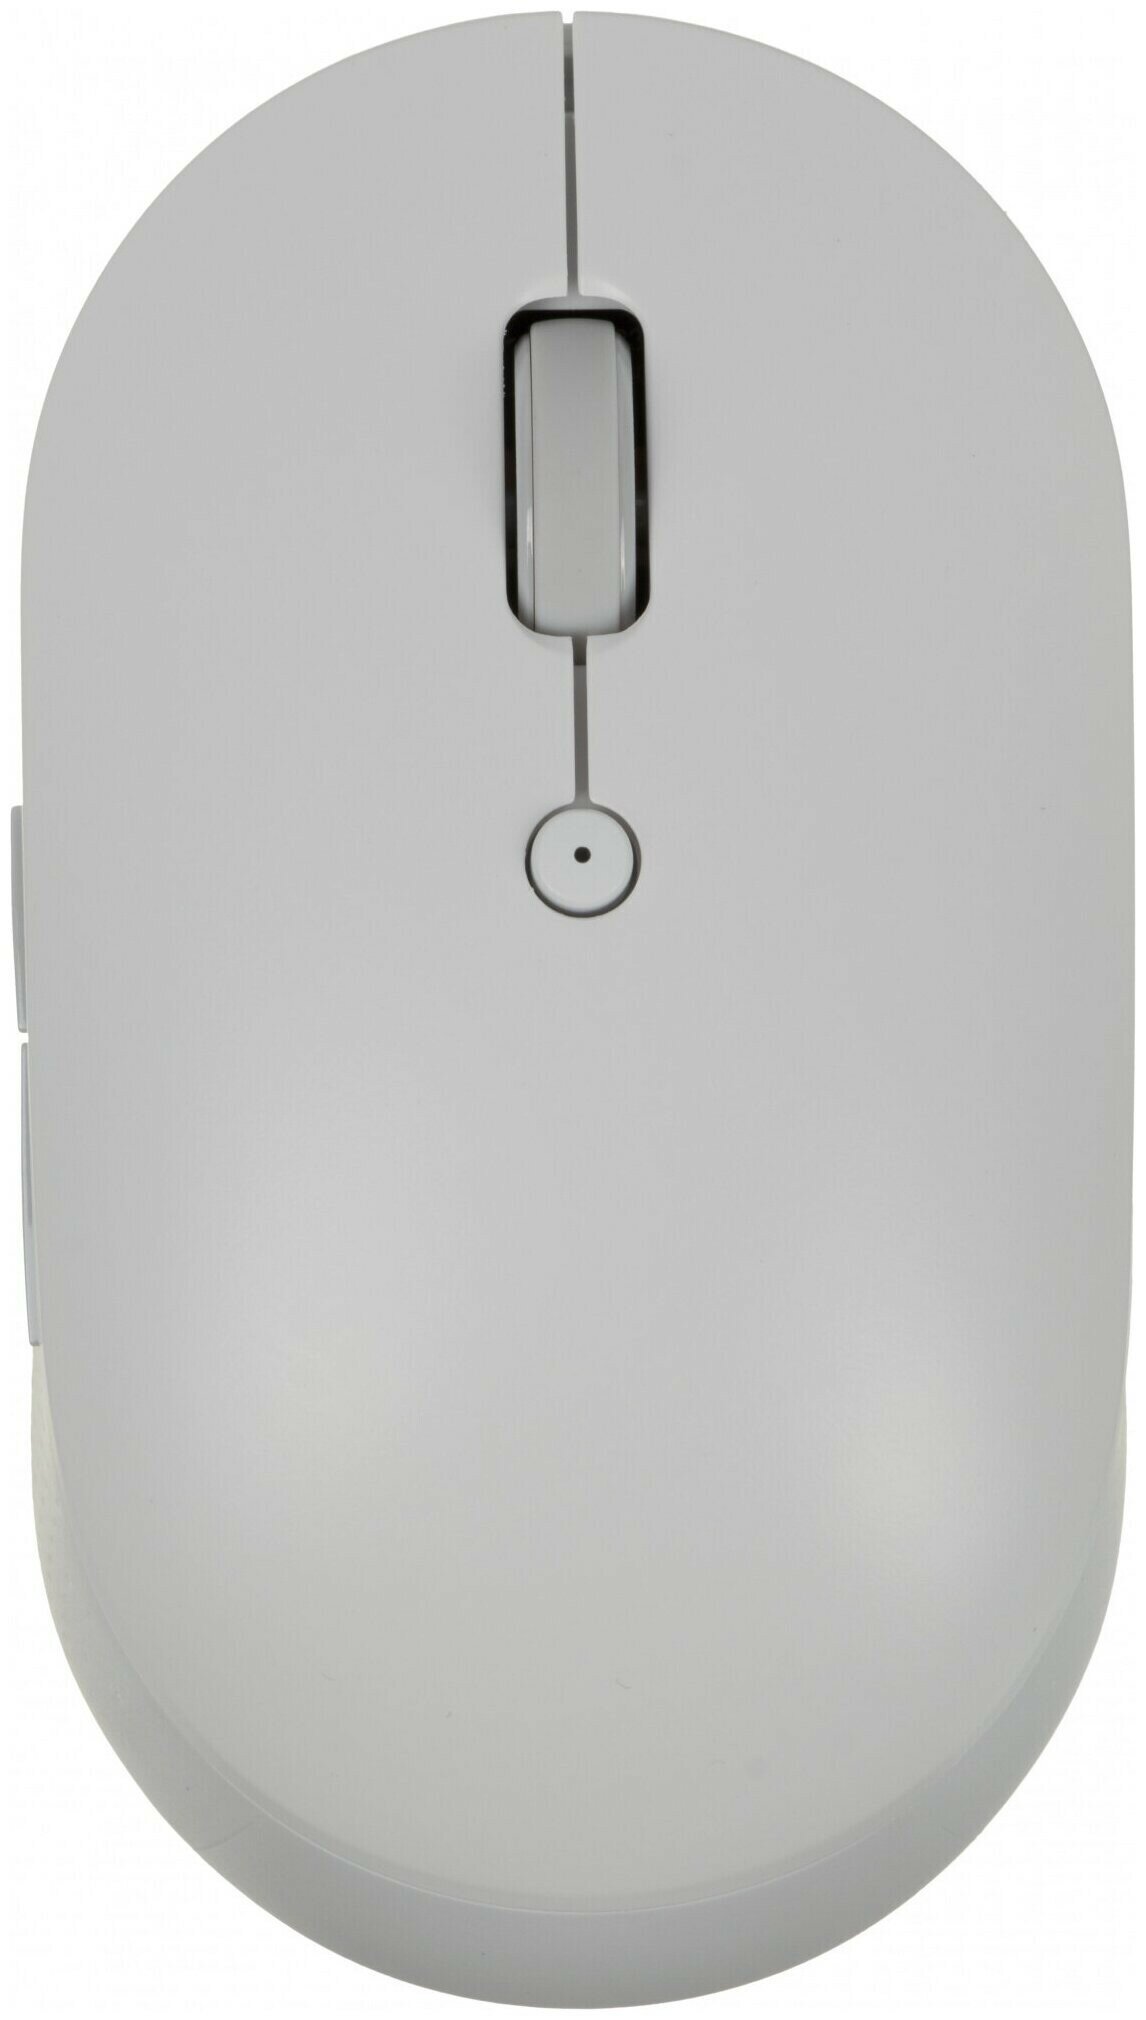 Мышь Xiaomi Mi Dual Mode Wireless Mouse Silent Edition white